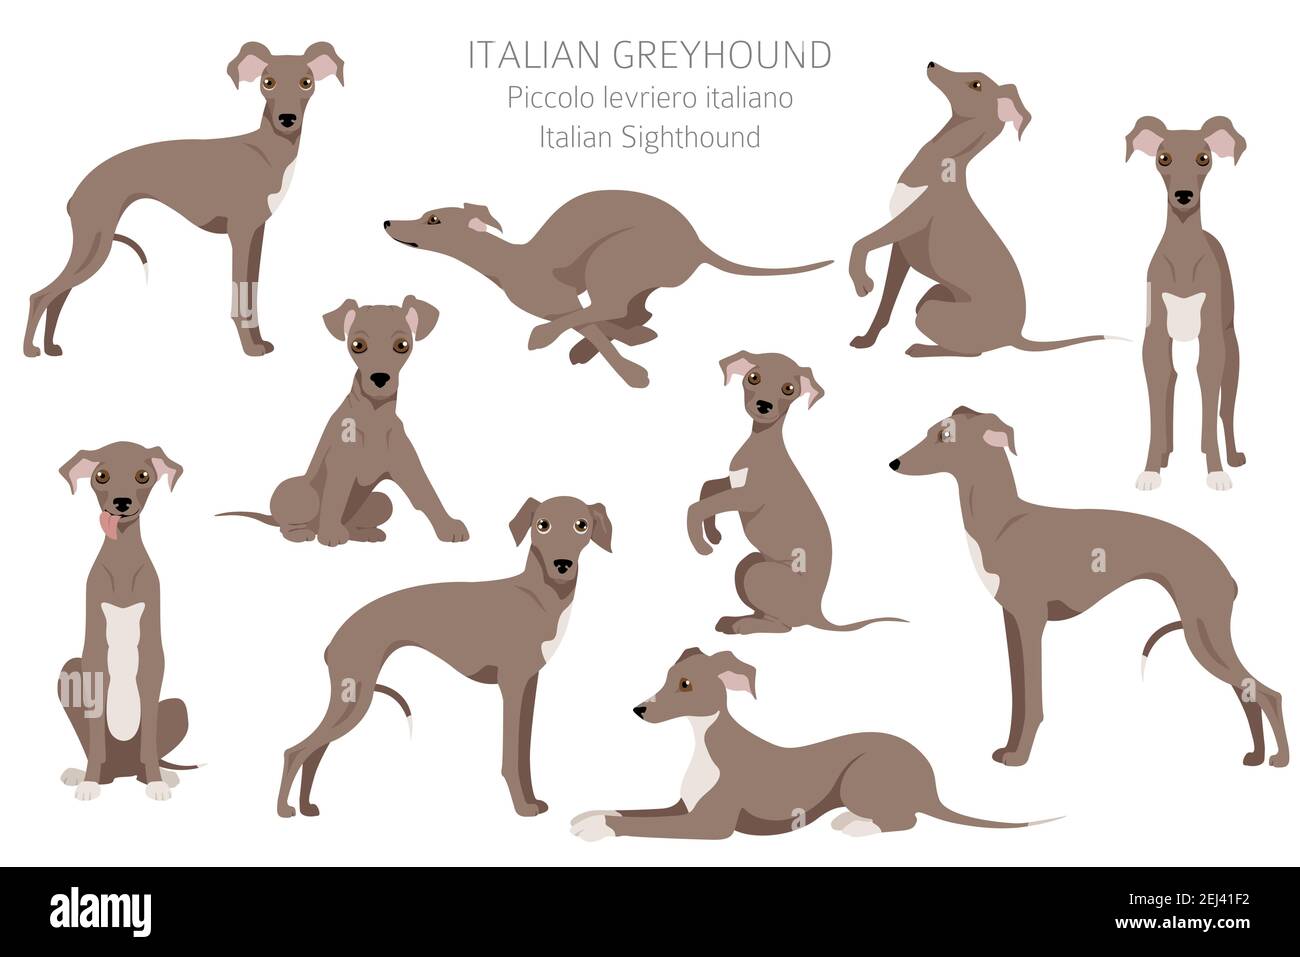 Italienischer Windhundclipart. Verschiedene Posen, Fellfarben gesetzt. Vektorgrafik Stock Vektor